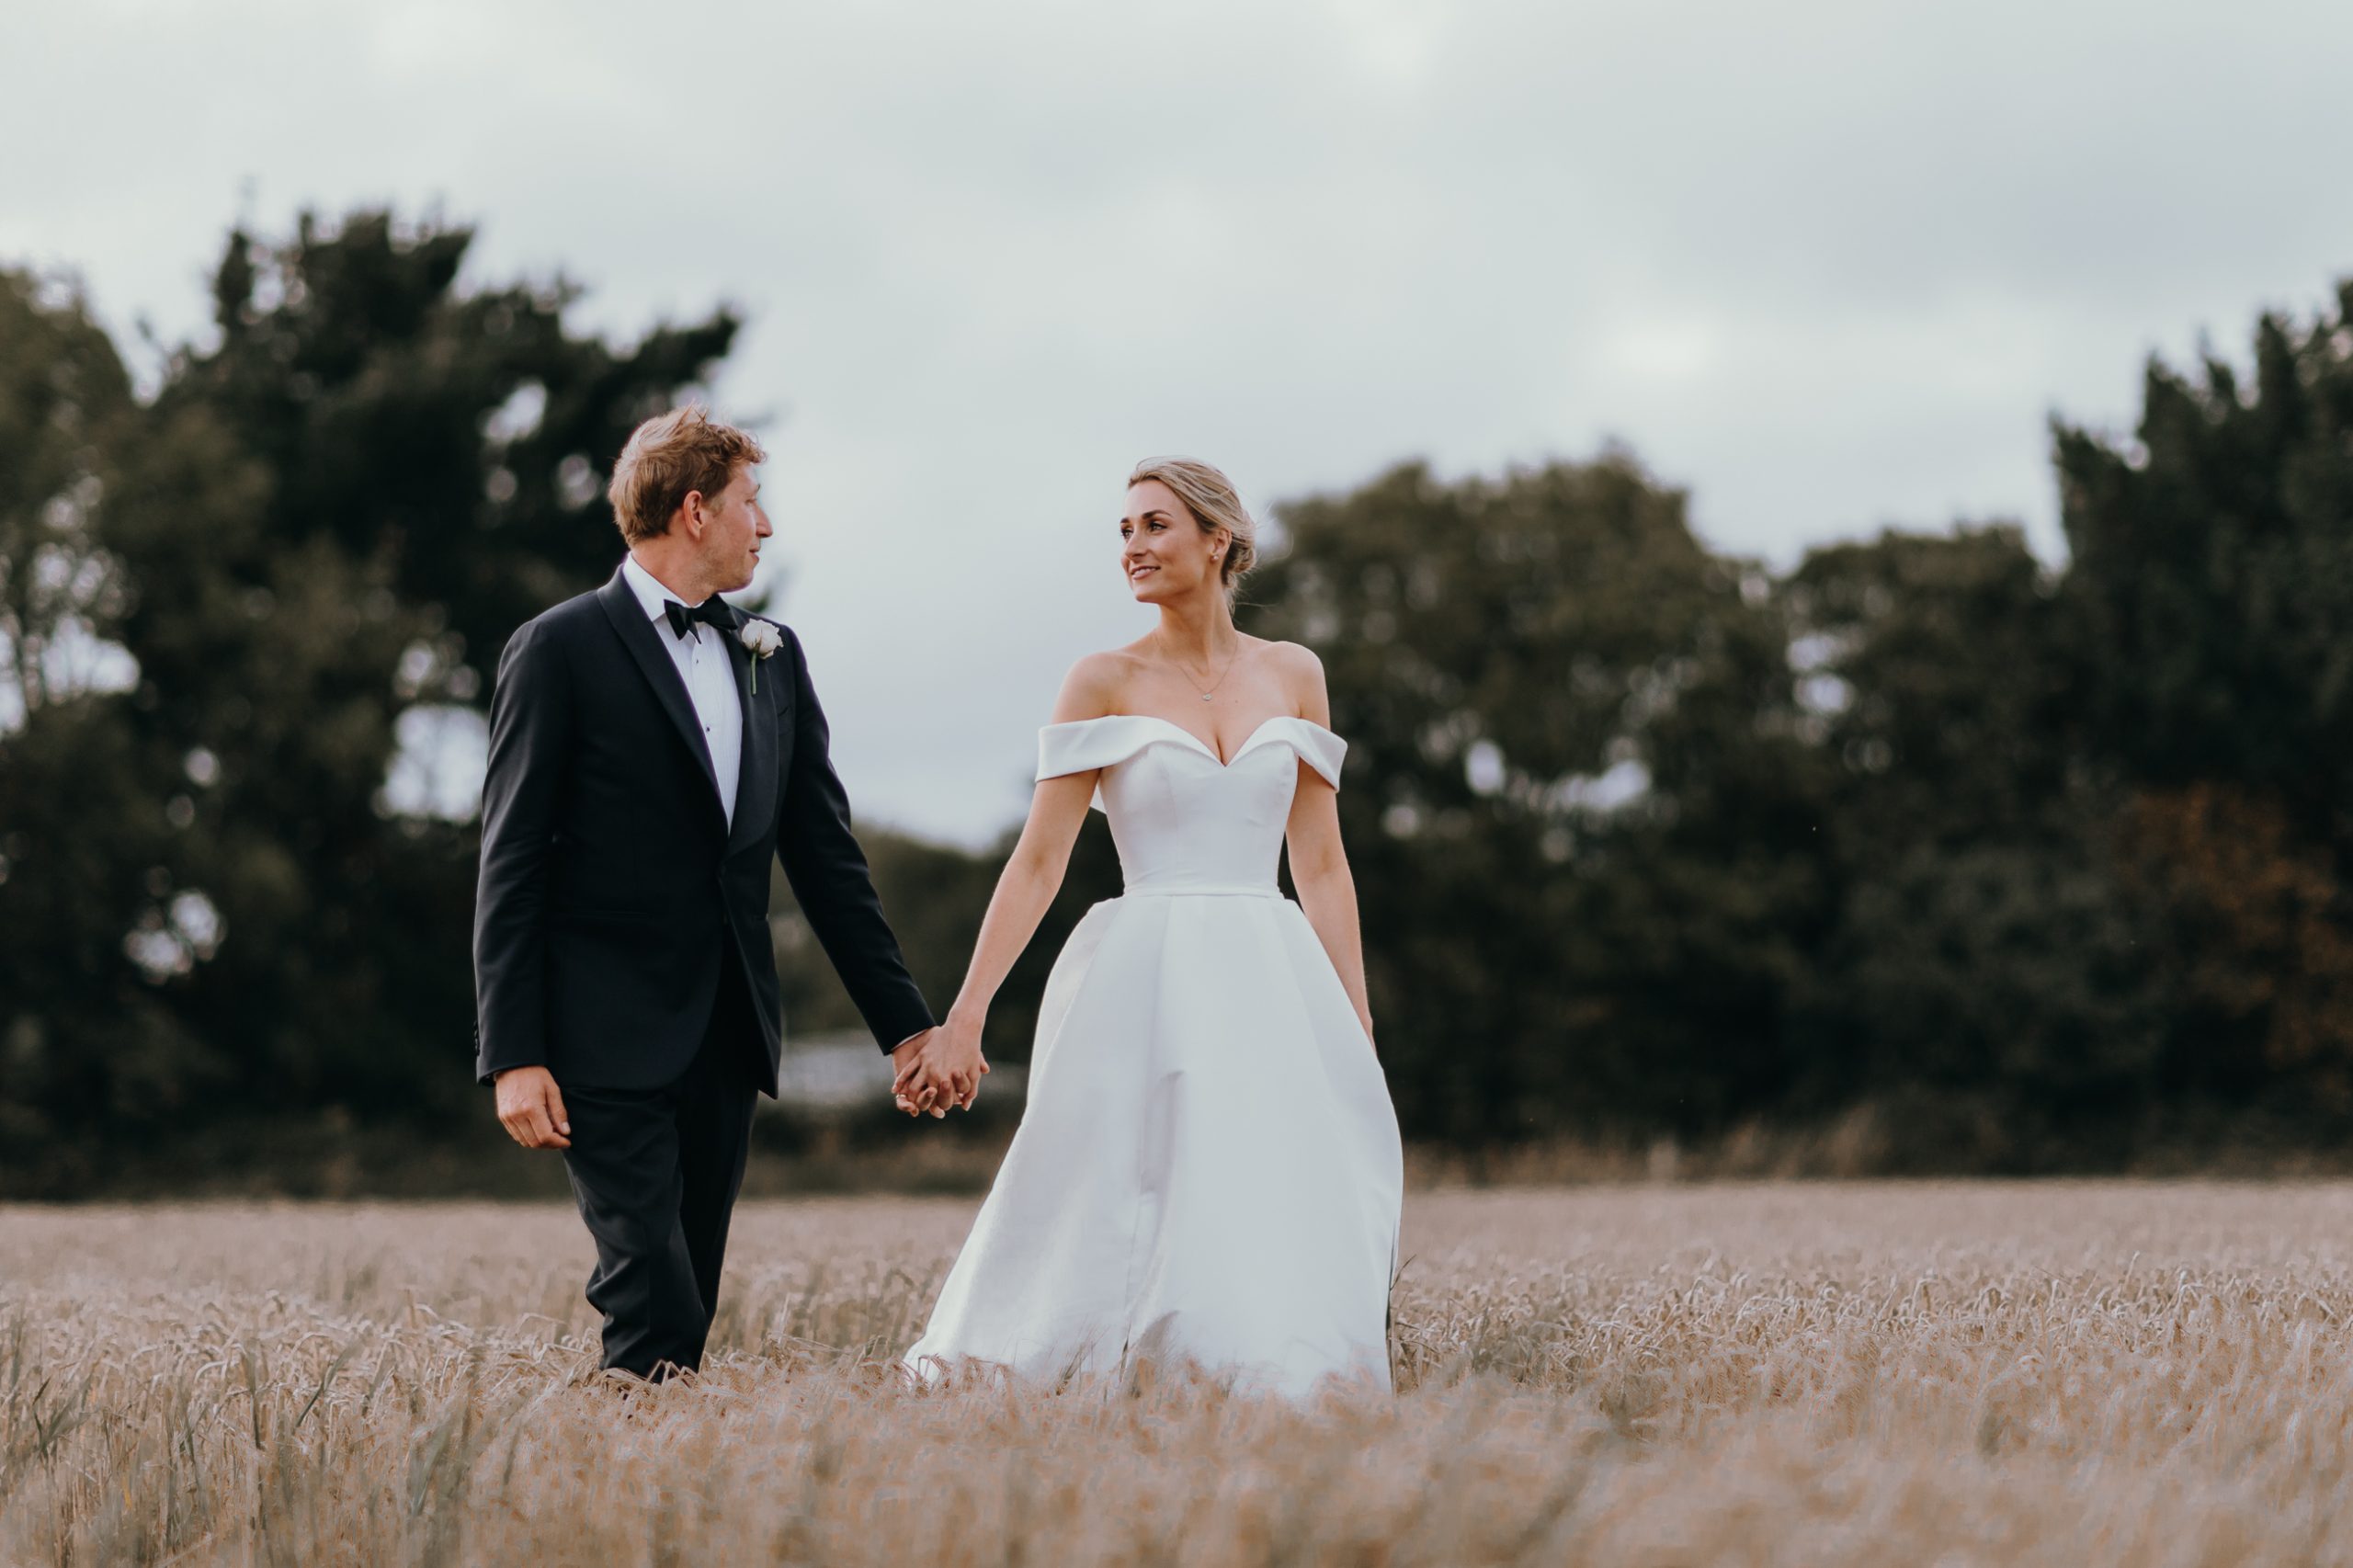 Capturing timeless moments • Hampshire wedding photography